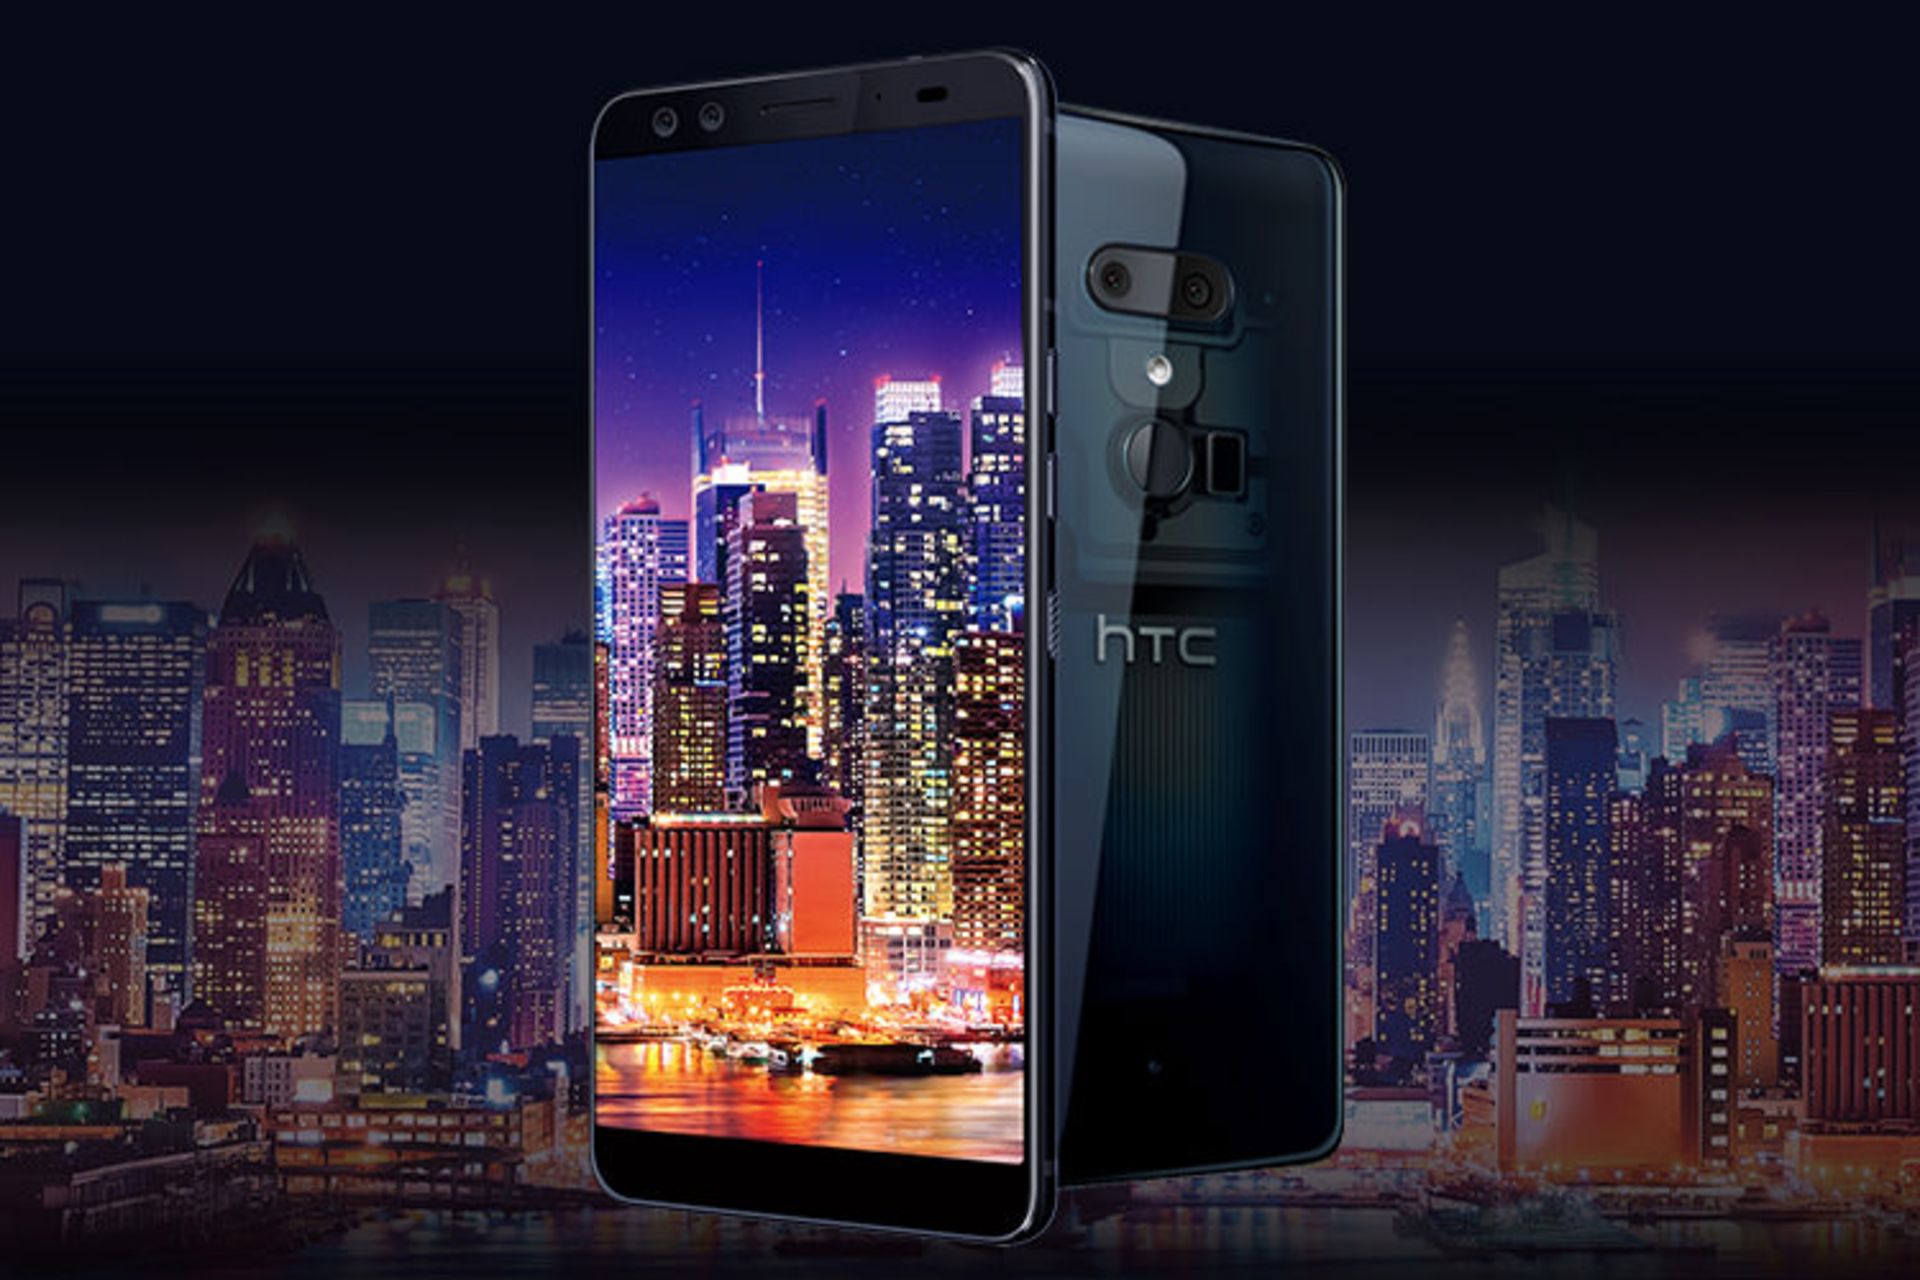 اچ تی سی یو 12 پلاس / HTC U12 Plus